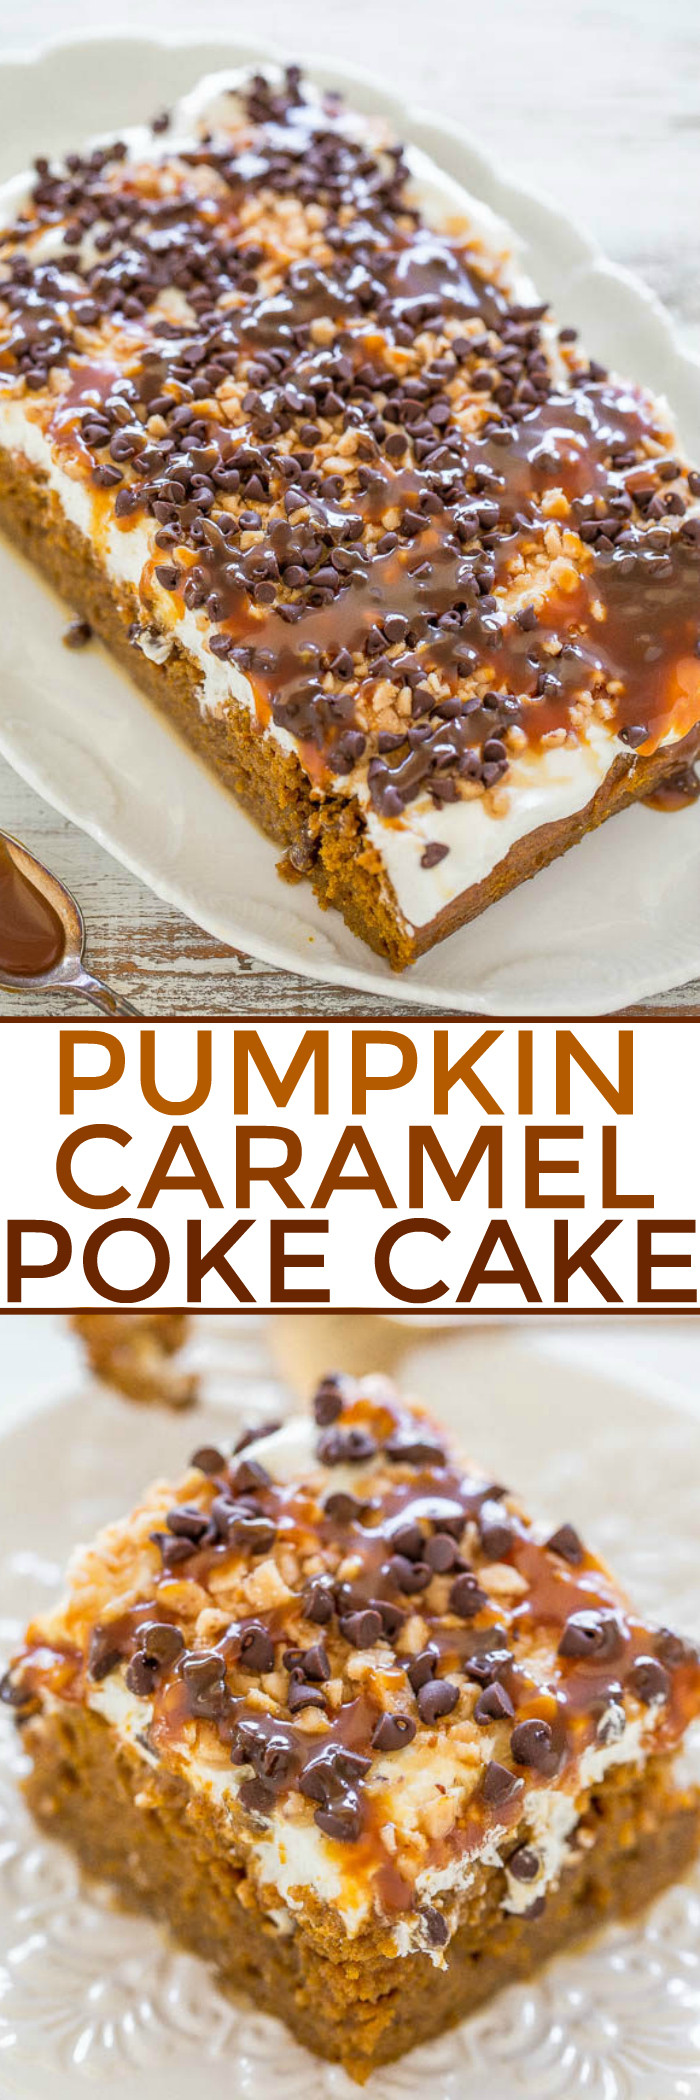 Pumpkin Poke Cake
 Pumpkin Poke Cake Recipe with Caramel and Toffee